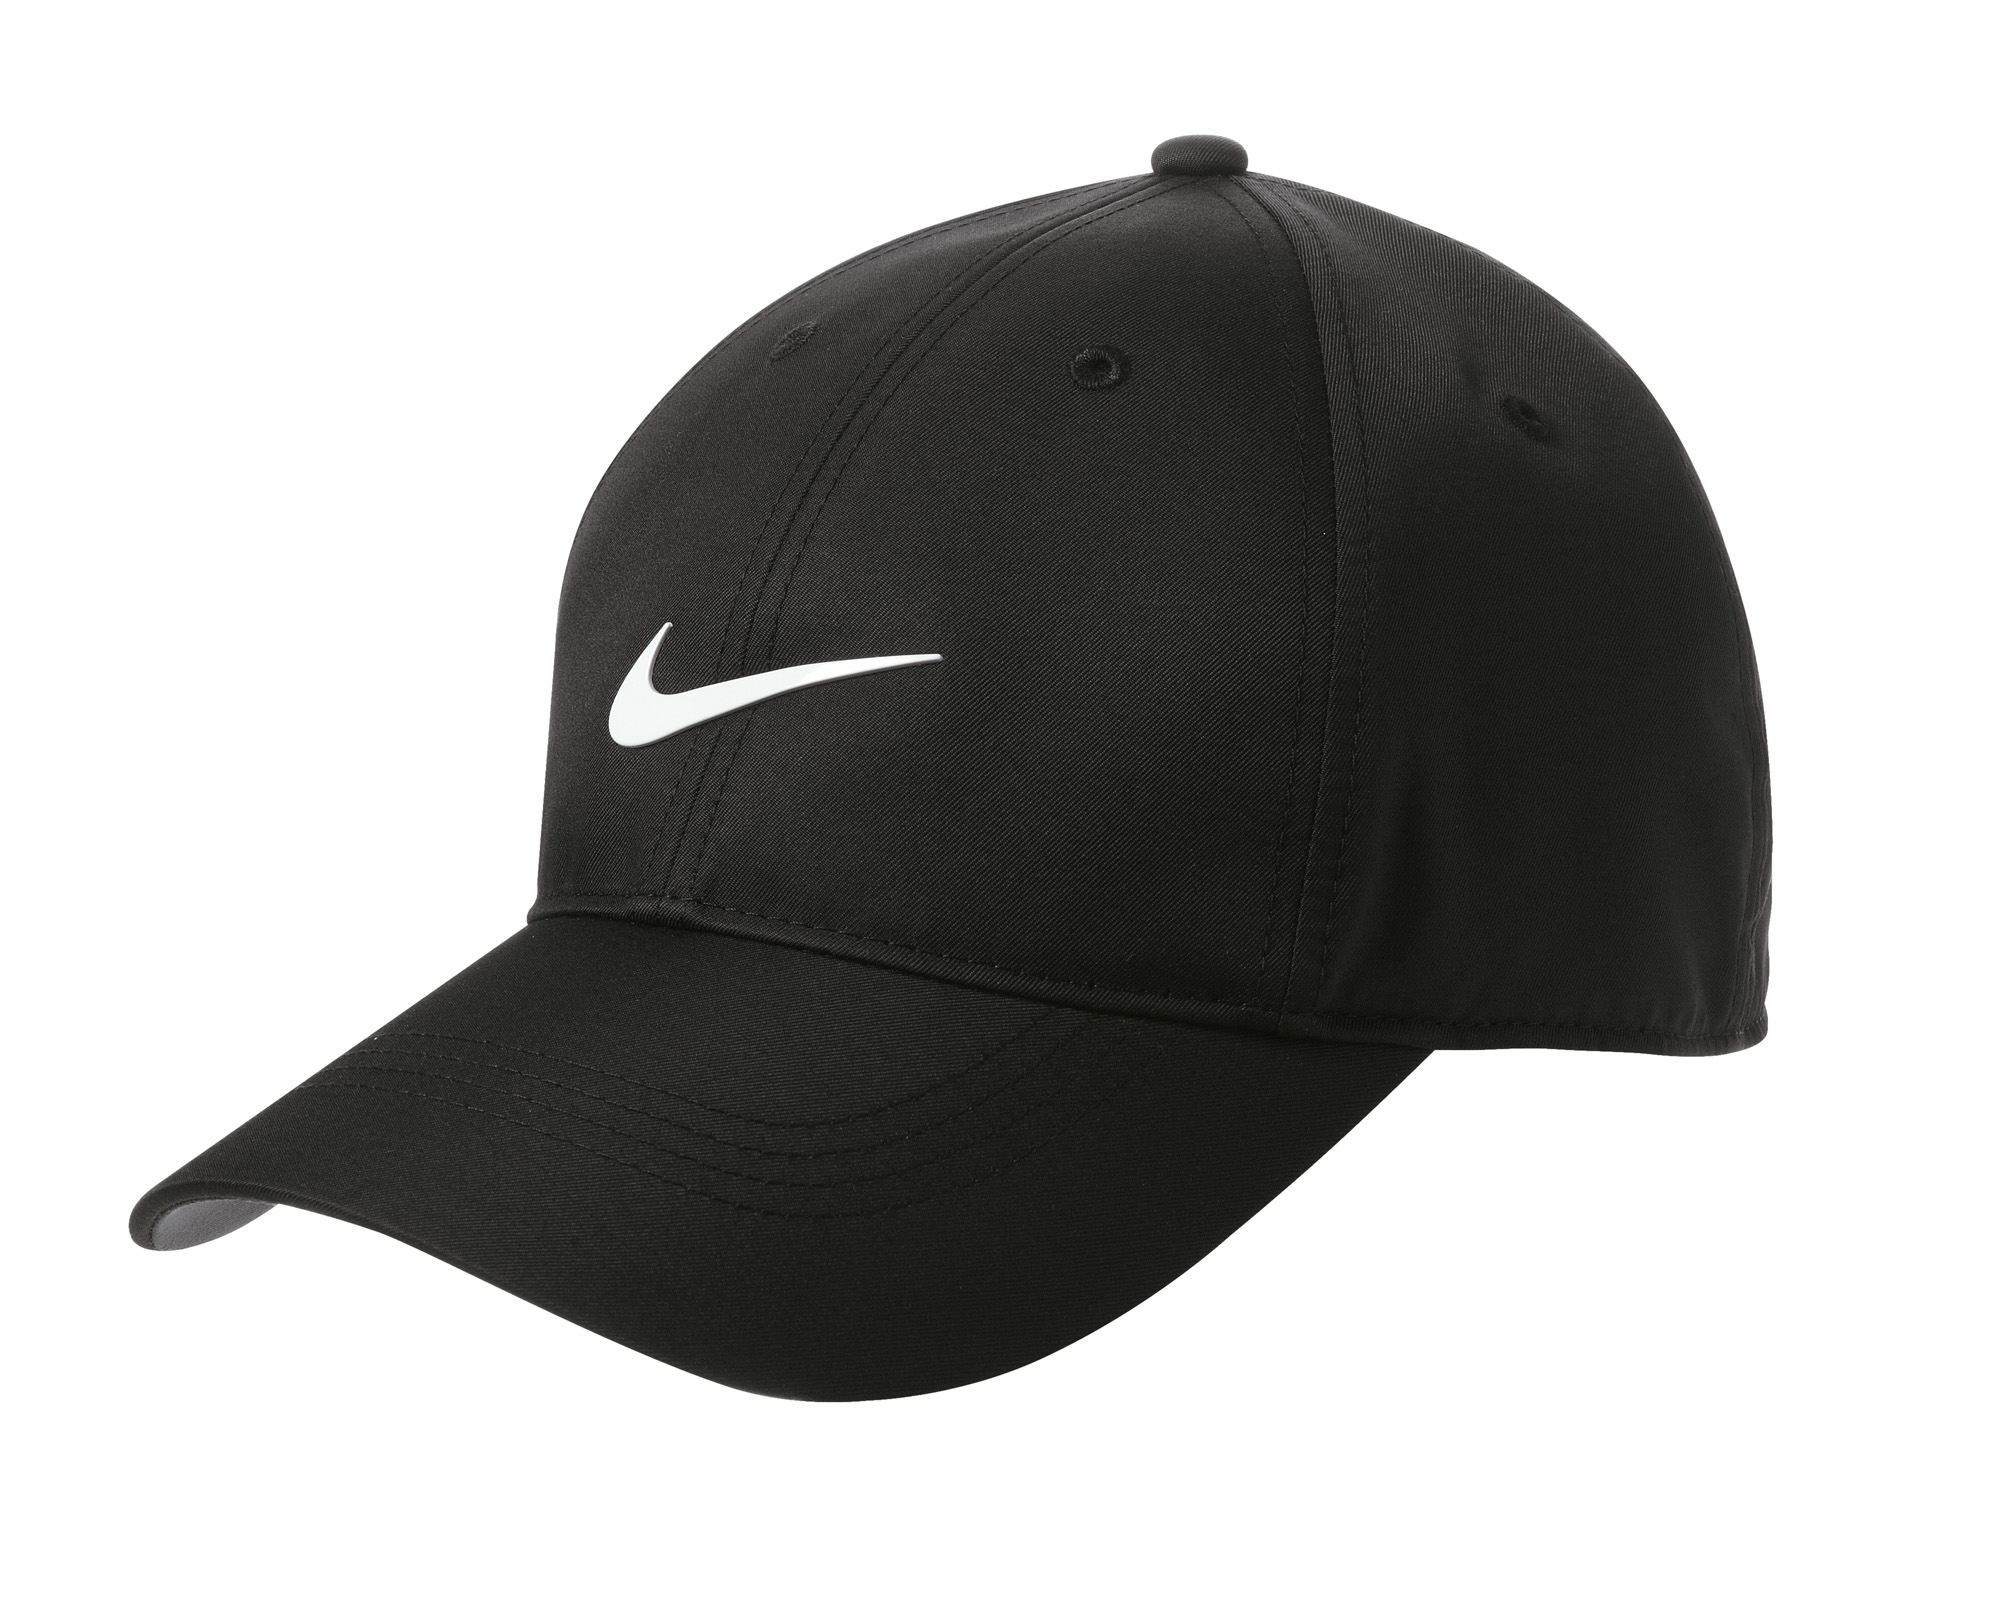 Nike Standard Golf Cap, Black, Adjustable - image 1 of 2